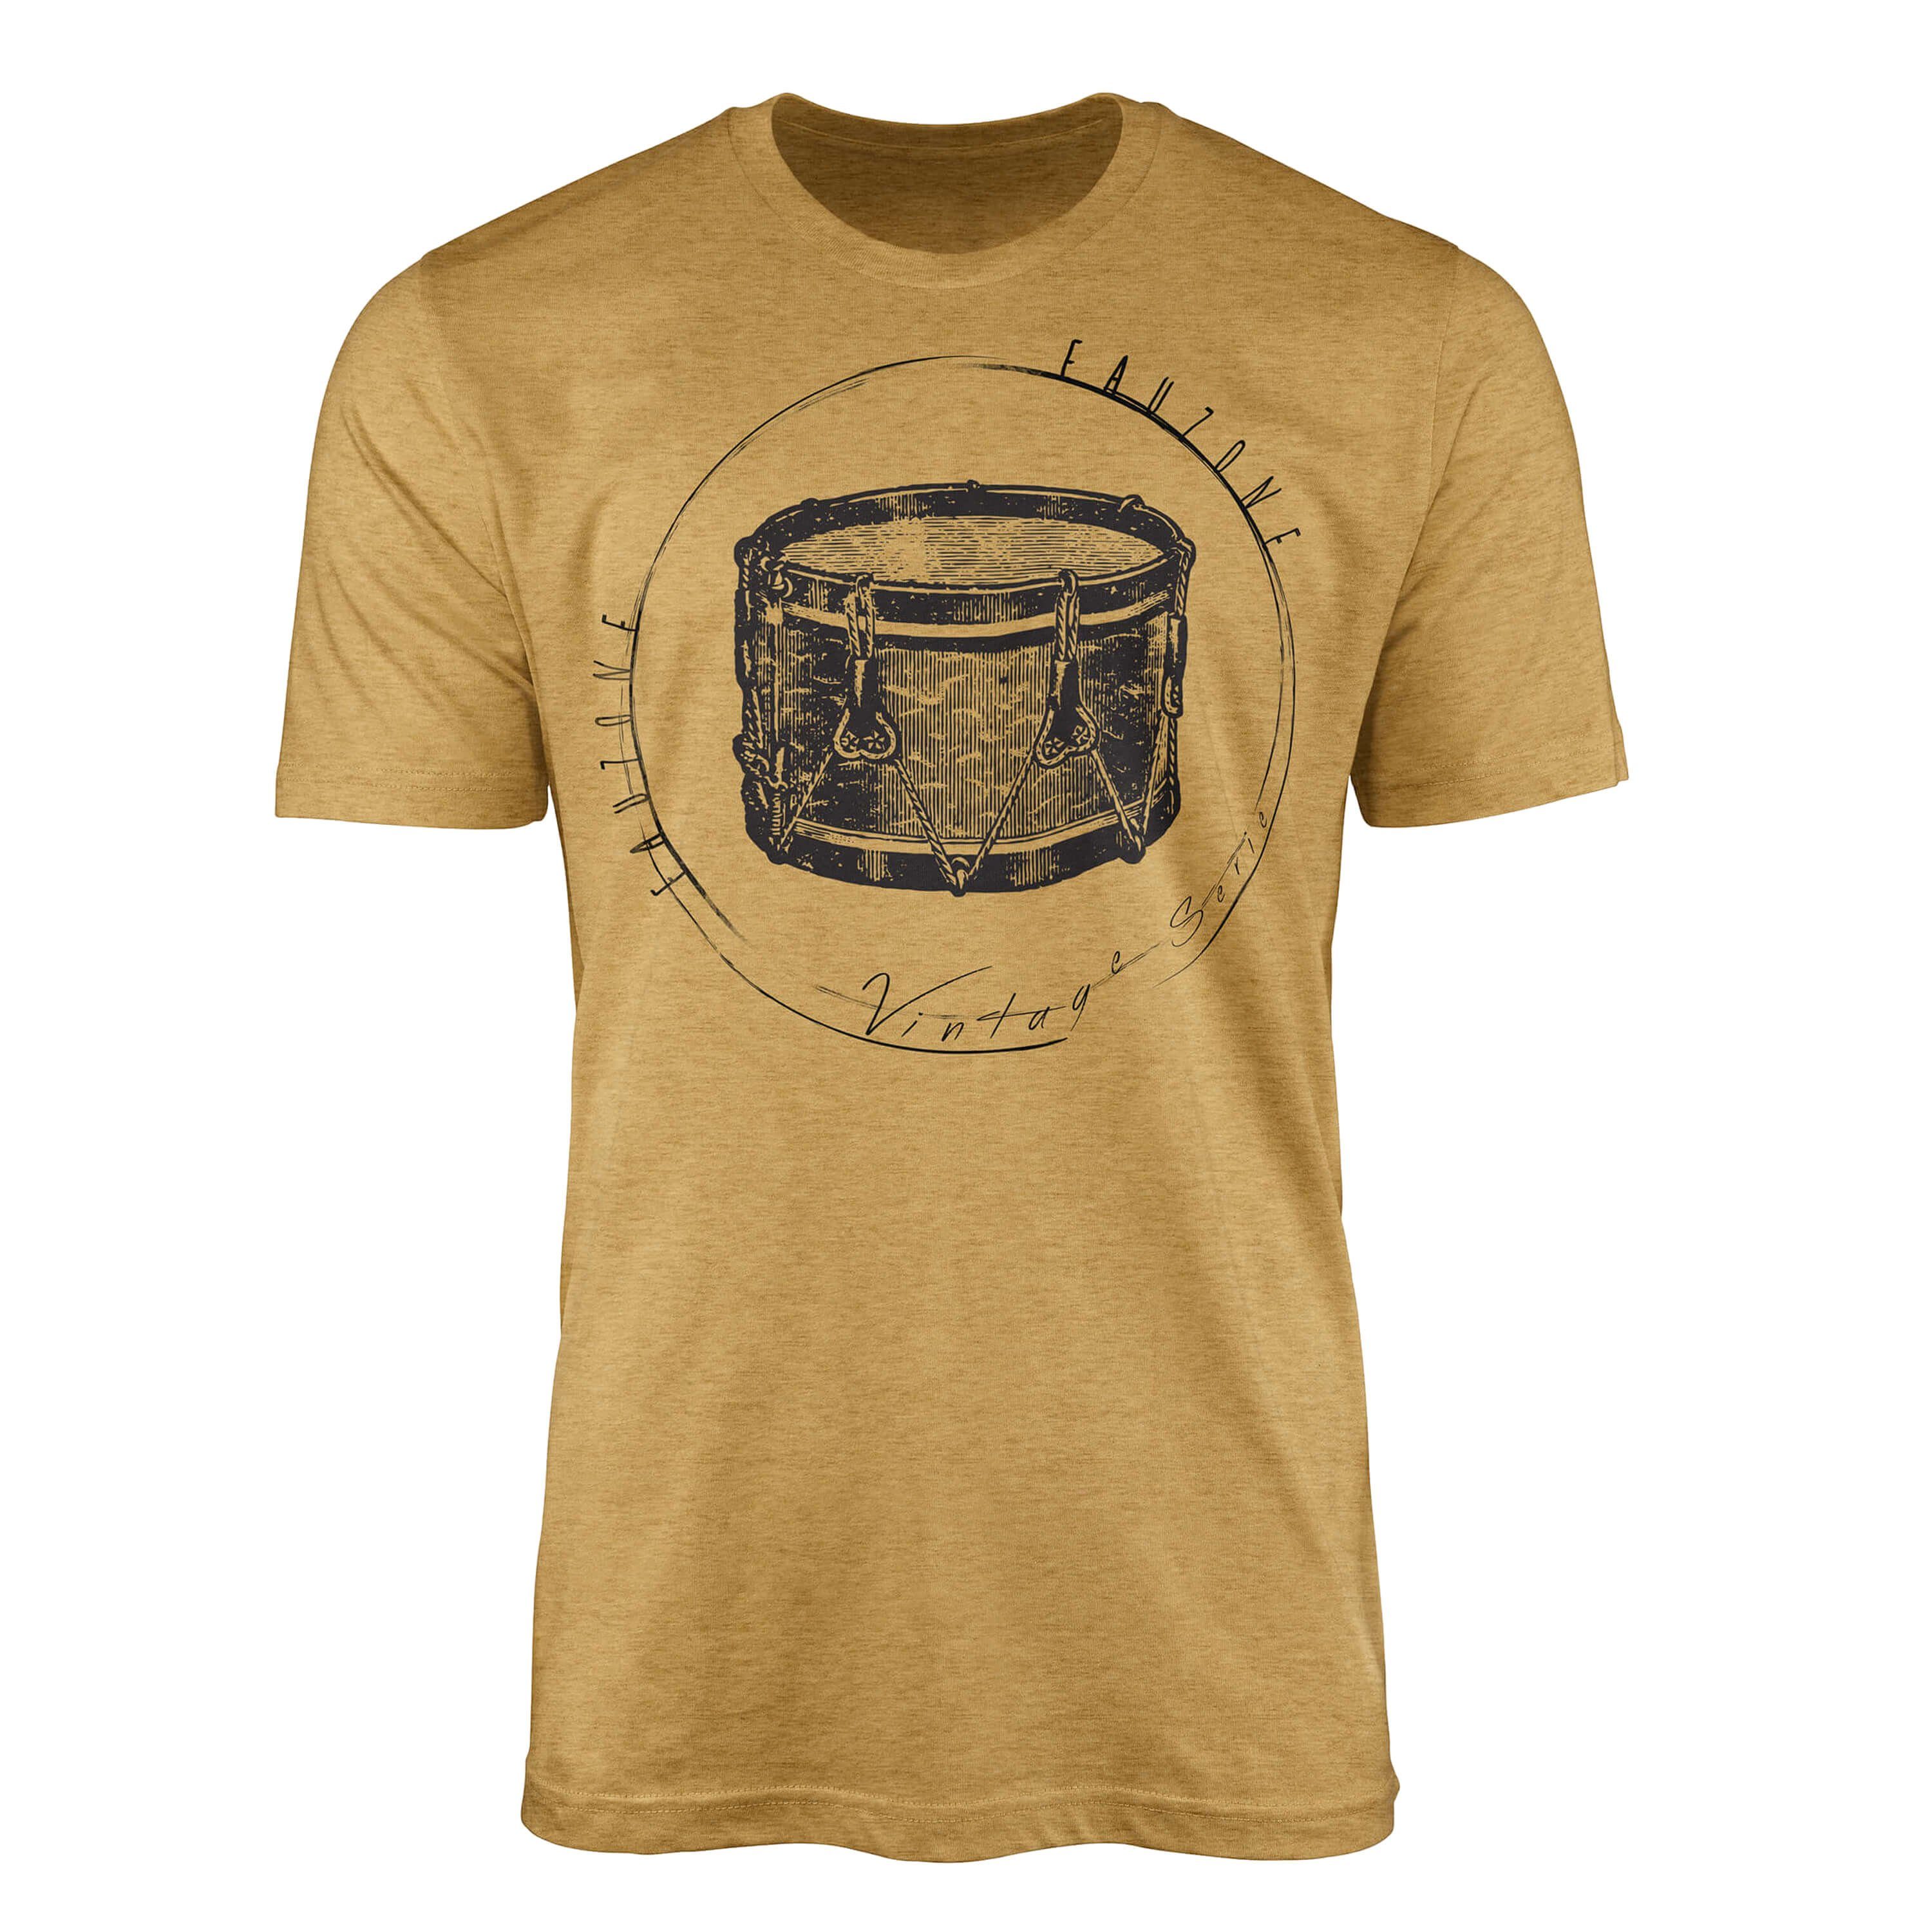 Sinus Art T-Shirt Vintage Herren T-Shirt Trommel Antique Gold